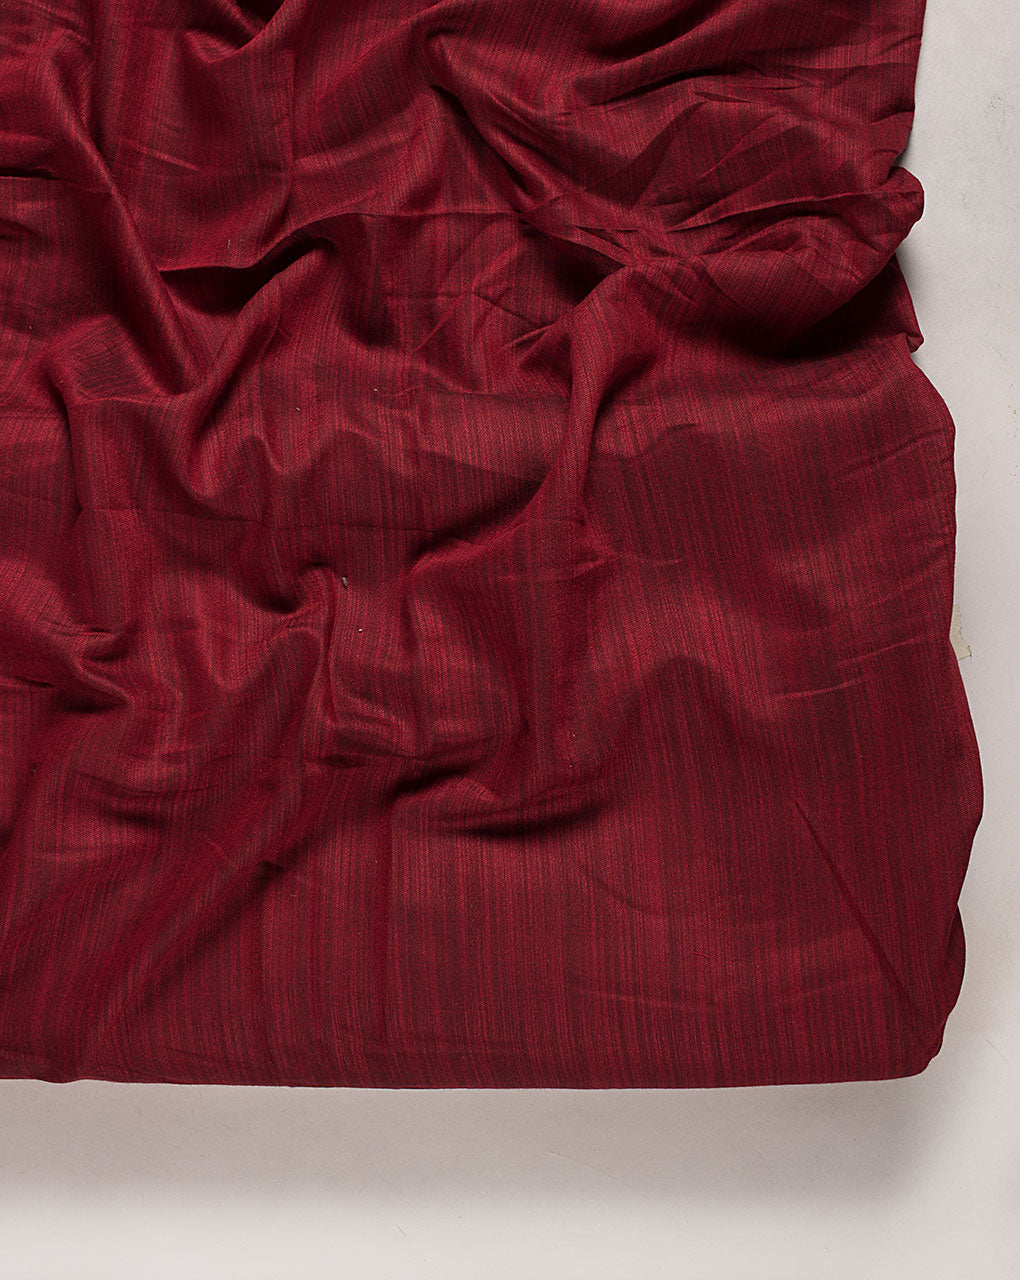 Red Plain Art Silk Fabric